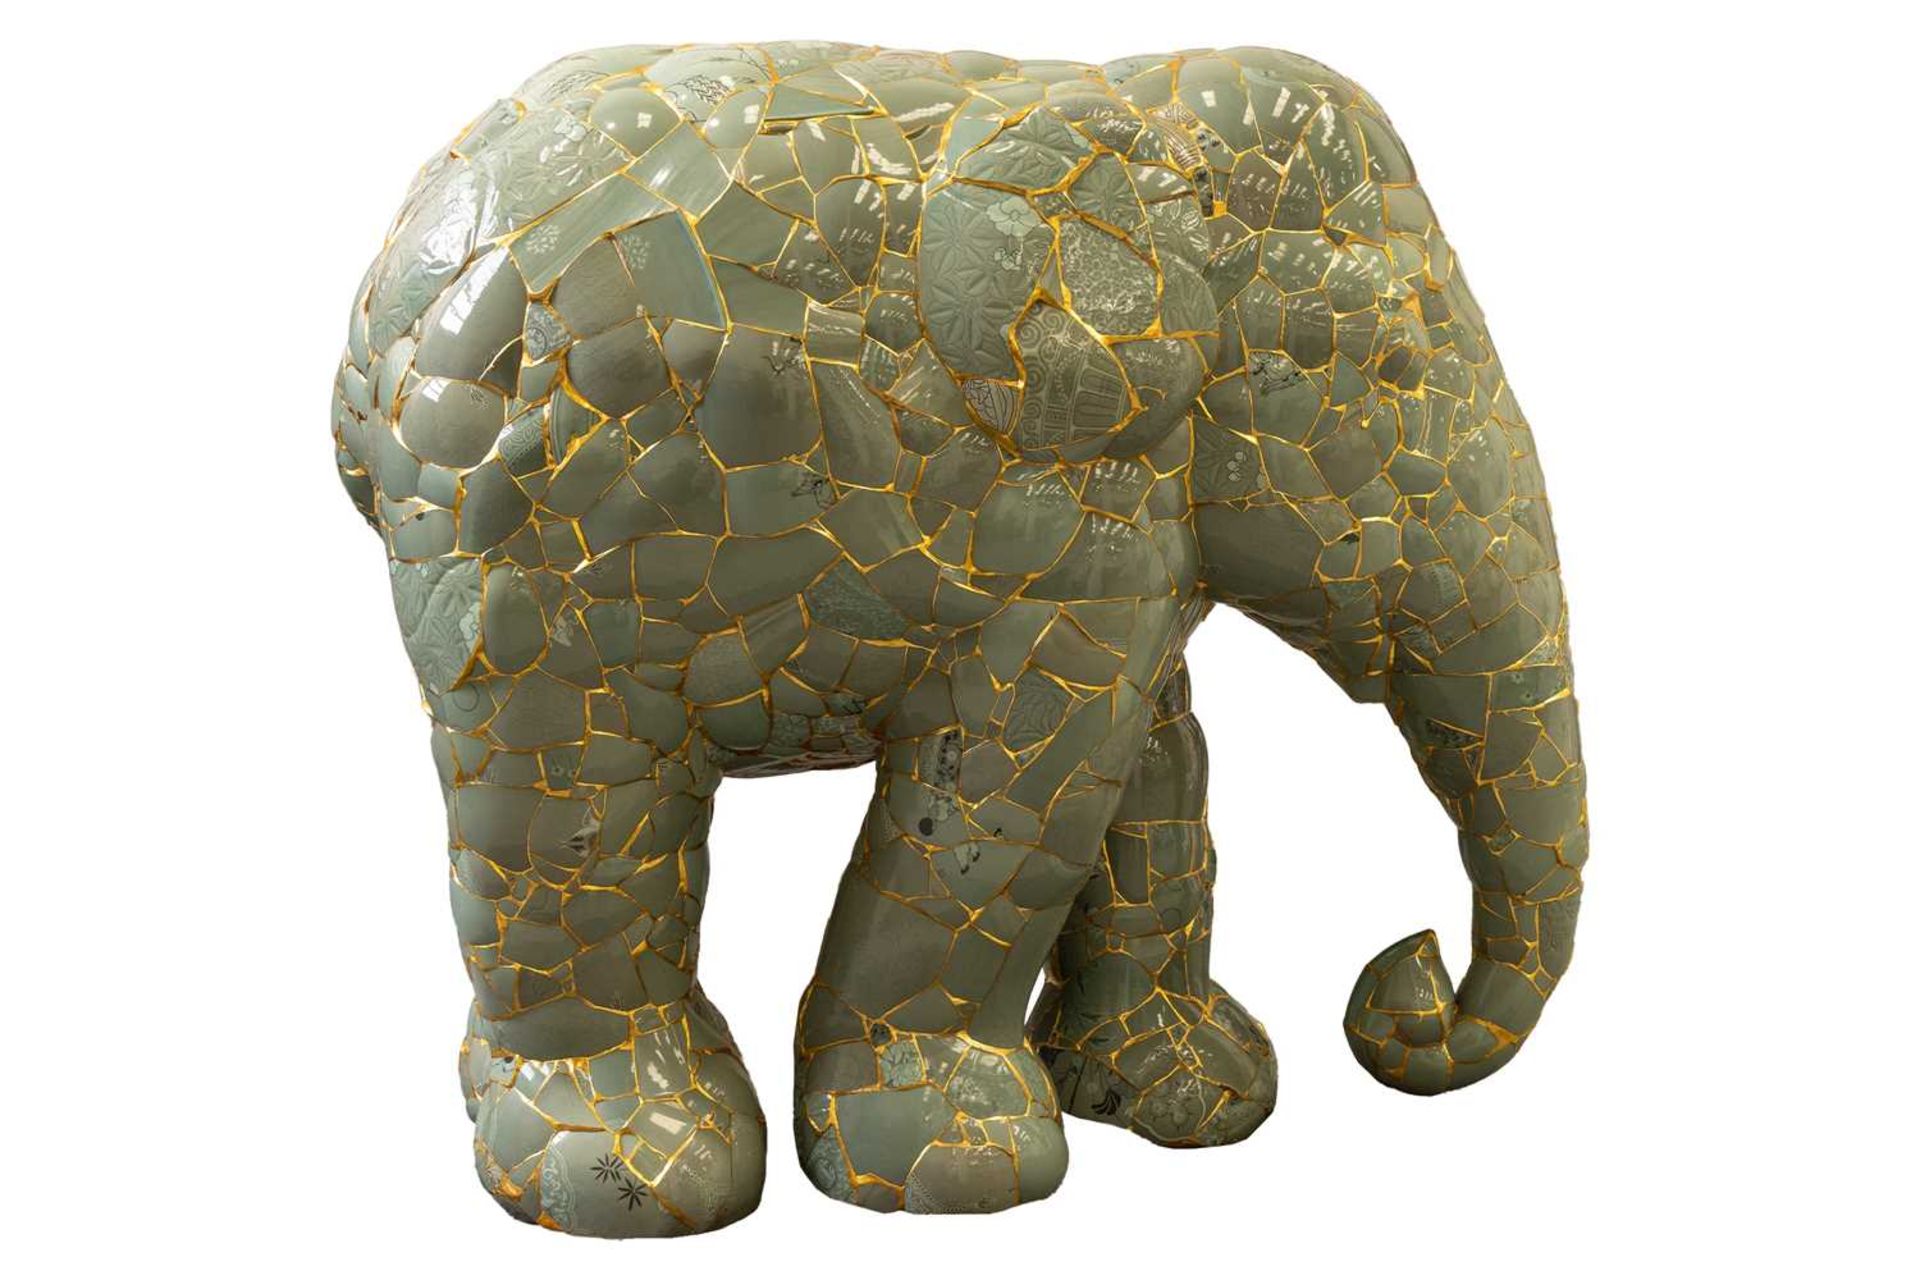 Yeesookyung (b. 1963) South Korean, 'Translated Vase Baby Elephant' (2012), celadon ceramic pieces f - Bild 3 aus 16